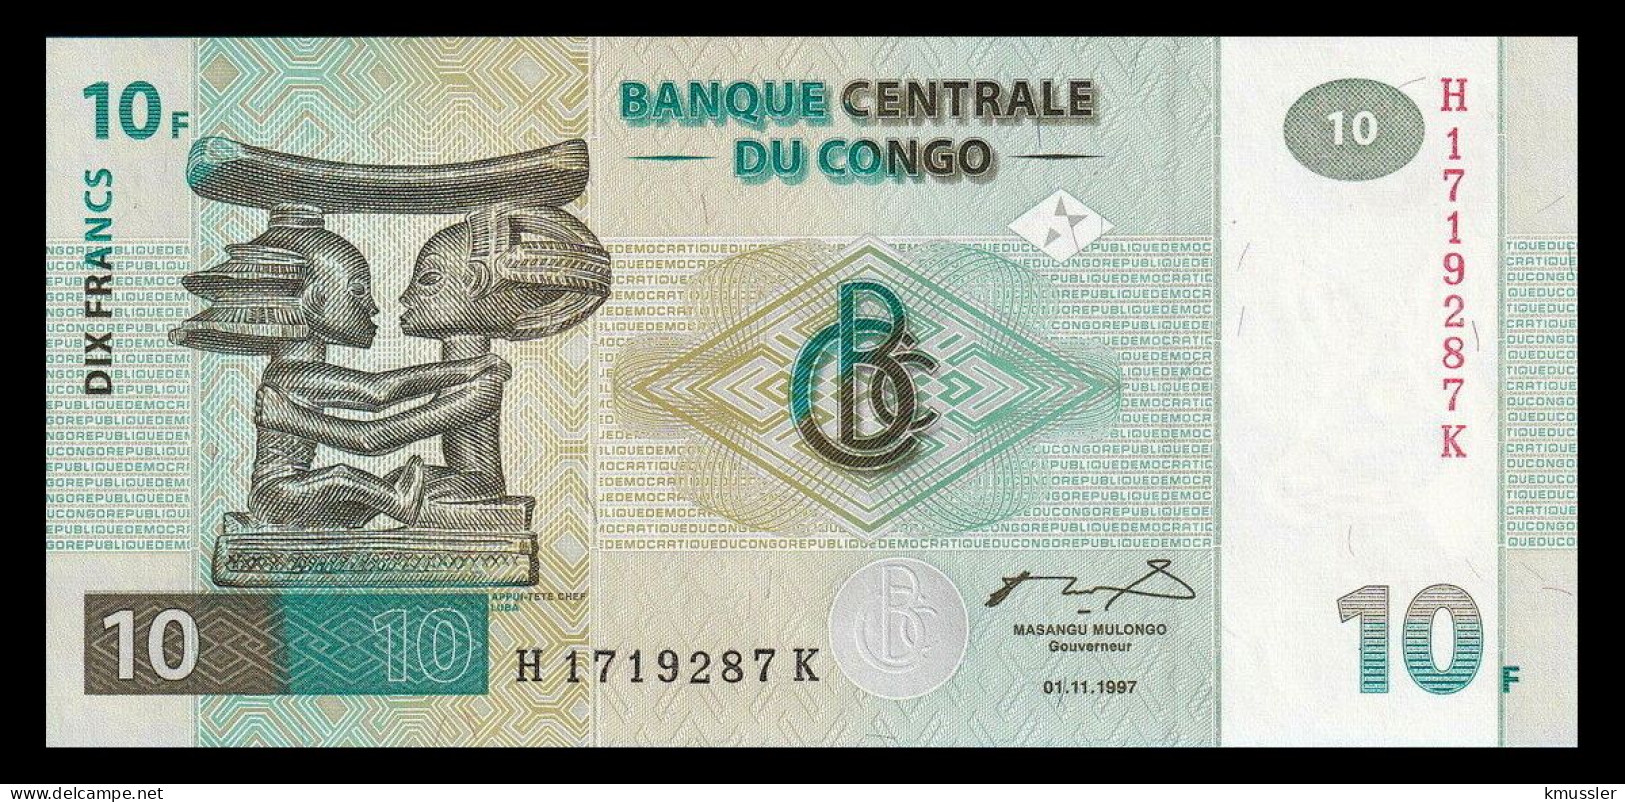 # # # Banknote Kongo (Congo) 10 Francs 1997 (P-87B) 1997 HdM UNC # # # - Repubblica Democratica Del Congo & Zaire